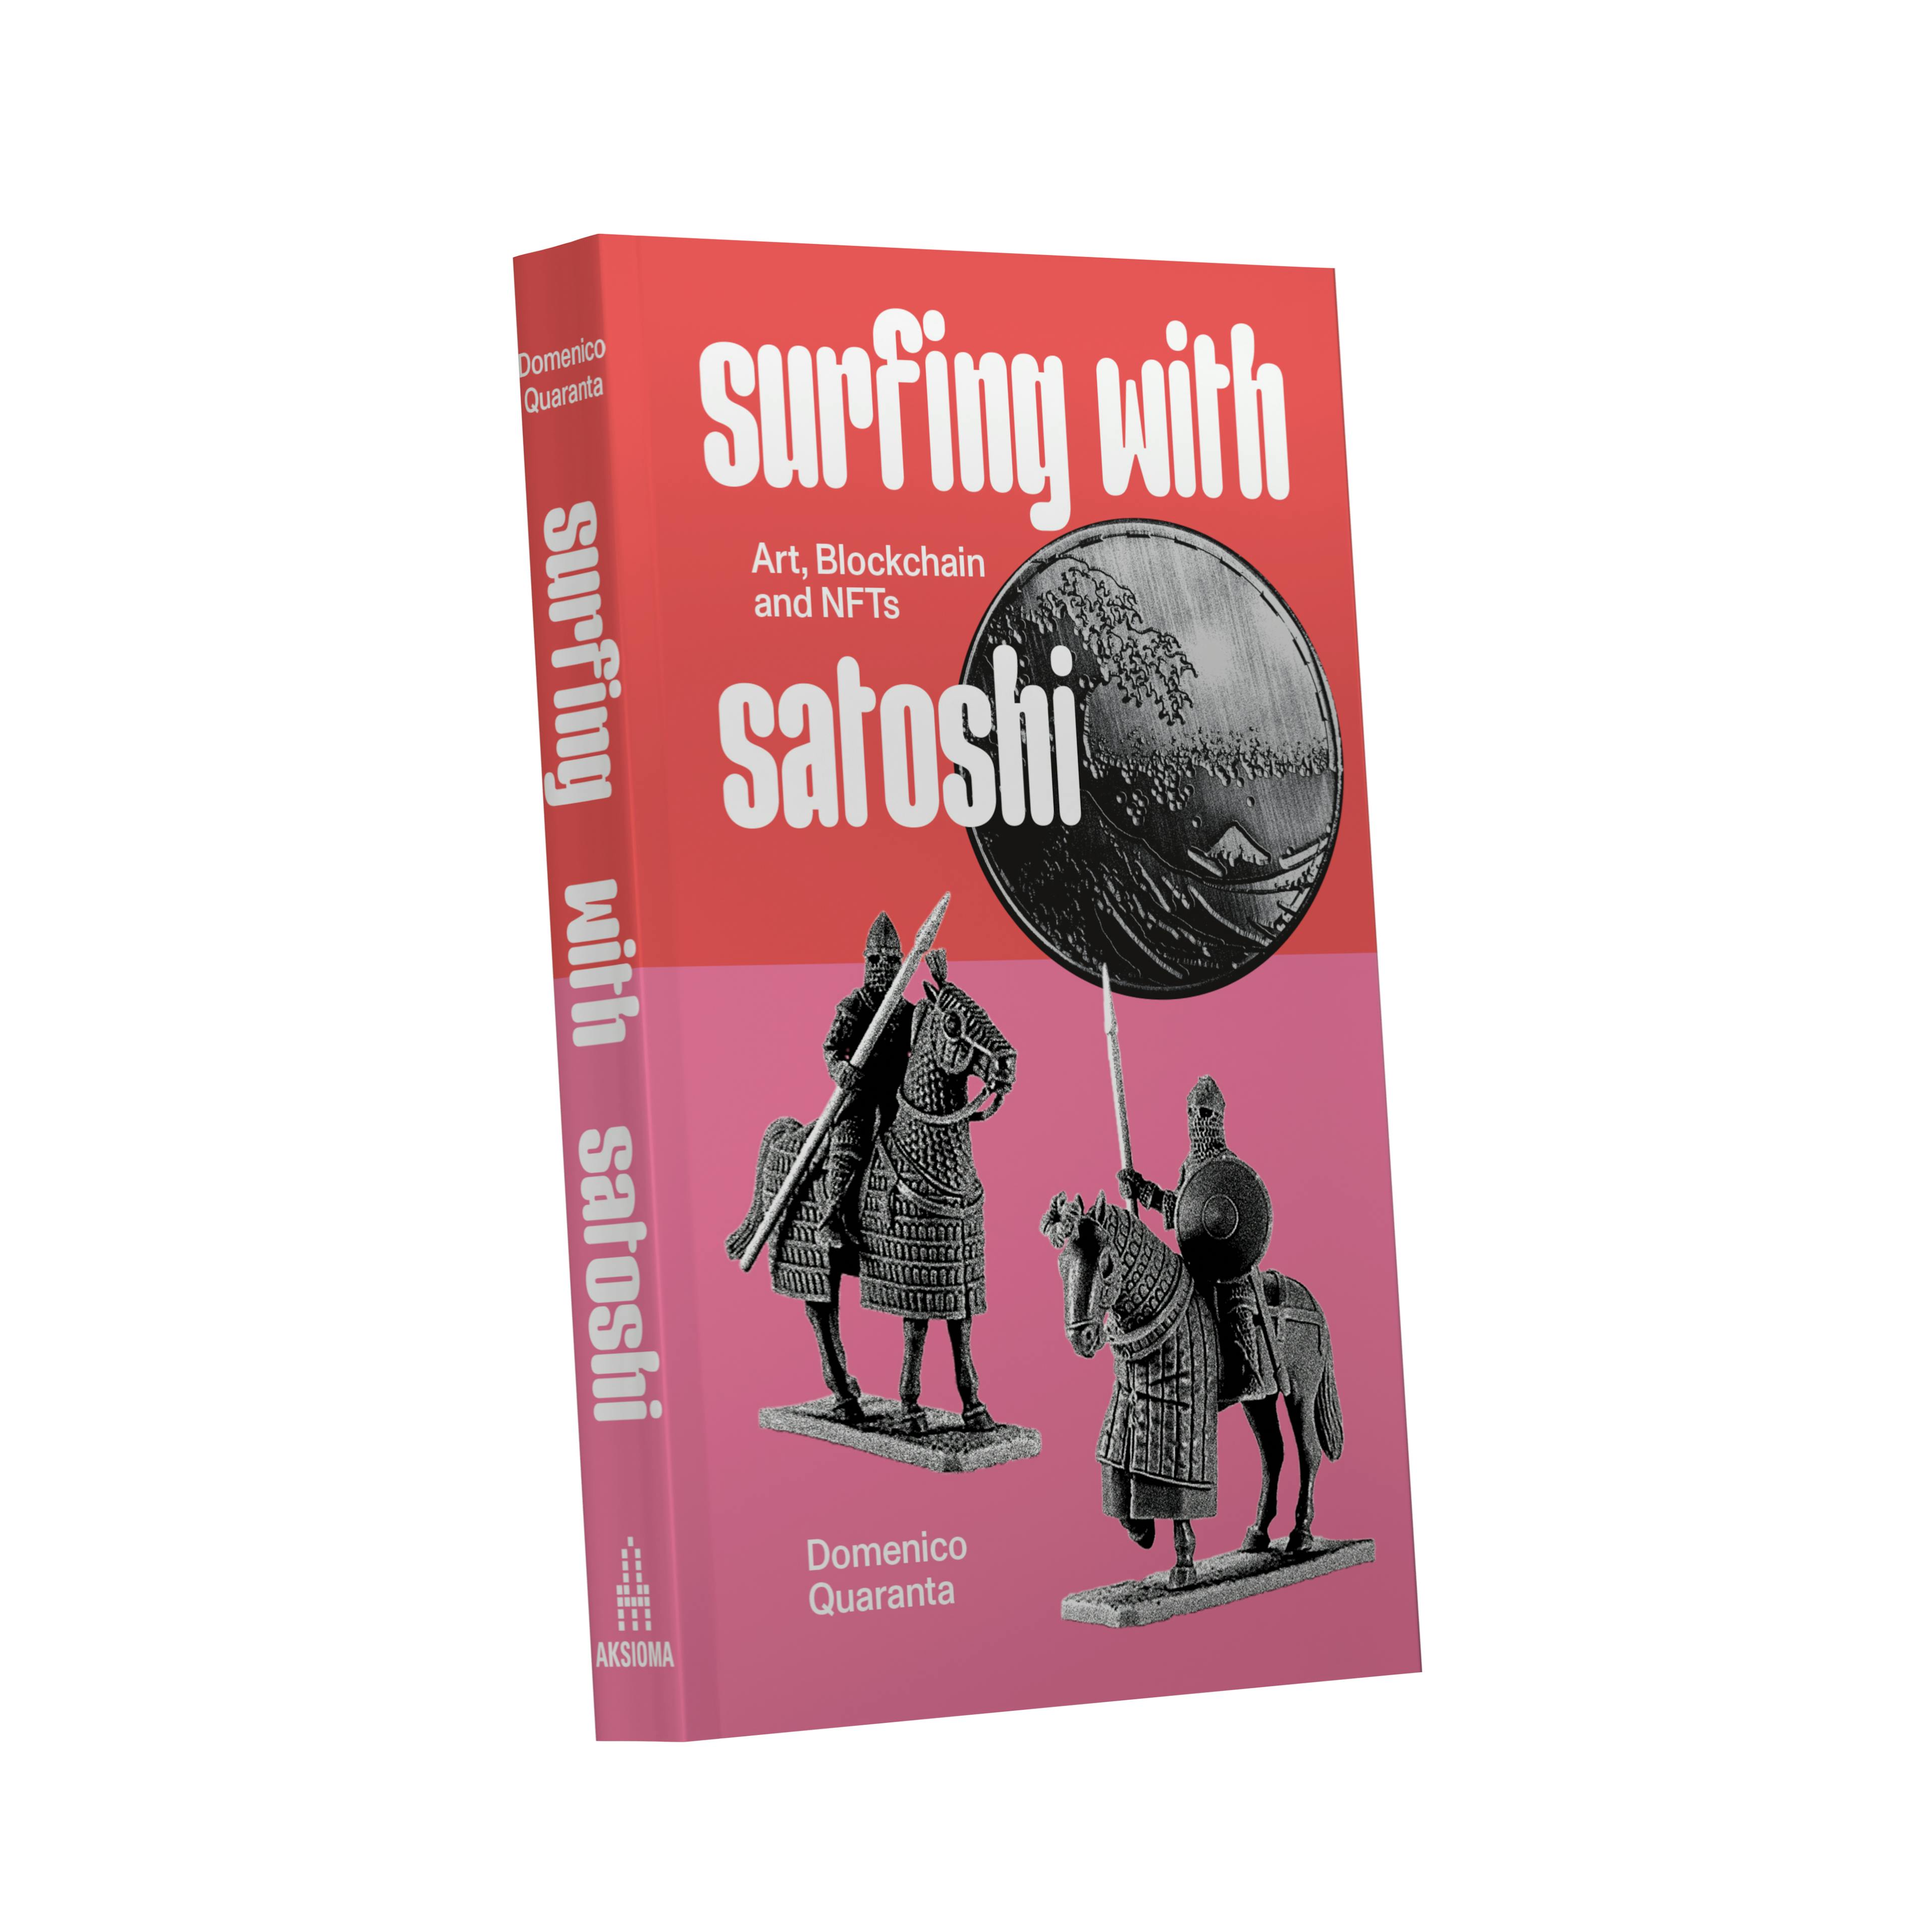 Domenico Quaranta, Surfing with Satoshi. Art, Blockchain and NFTs, Aksioma – Institute for Contemporary Art, Ljubljana 2022. 10.5 x 16.7 cm, 376 pages, ISBN: 978-961-7173-12-3 